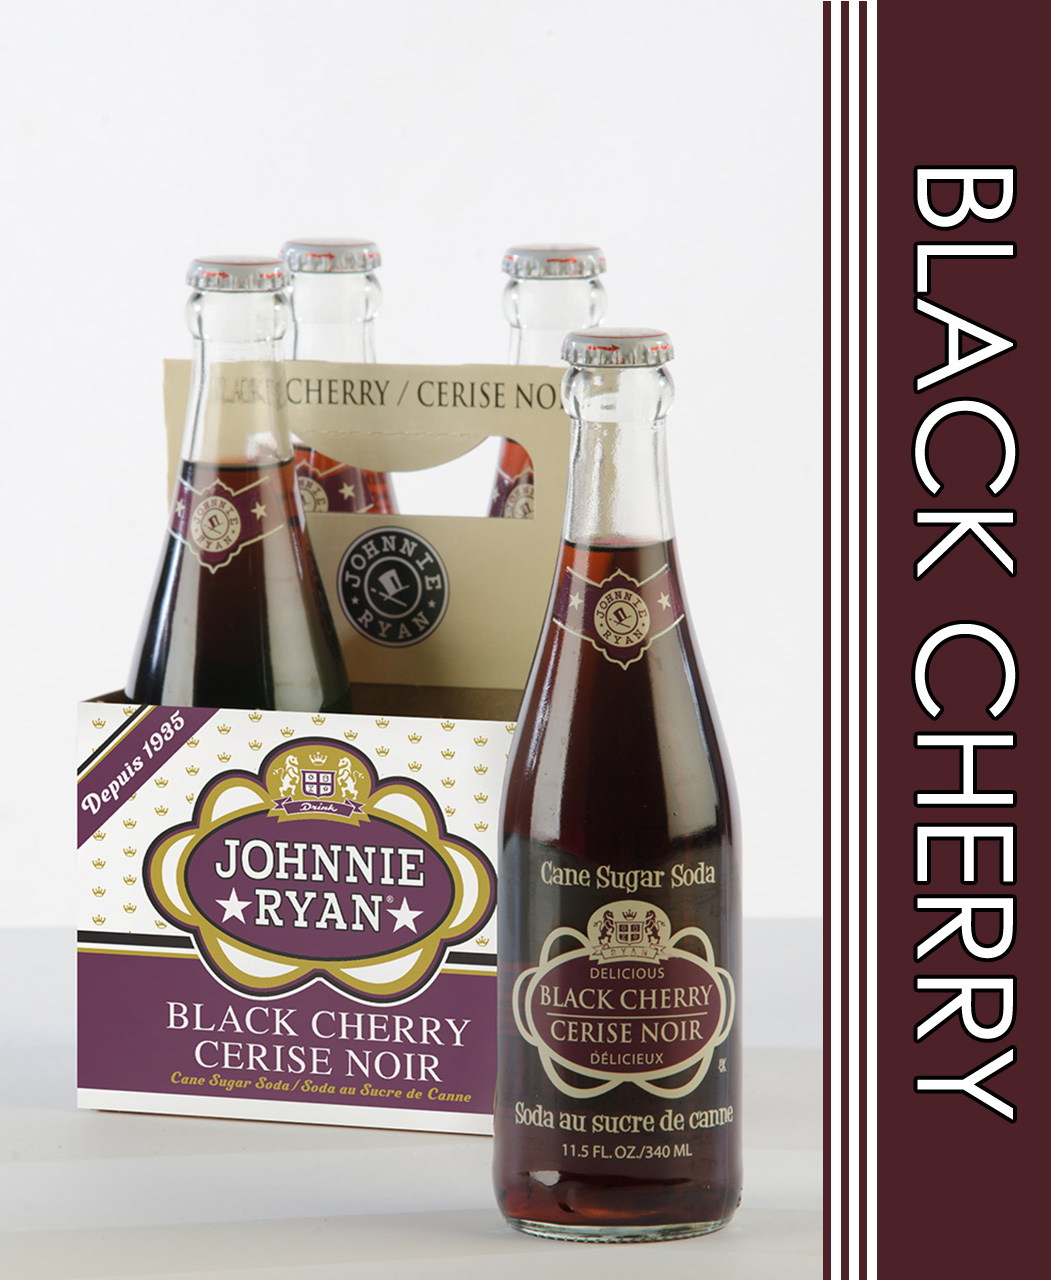 Black Cherry cane sugar soda from Johnnie Ryan beverages in Niagara Falls, NY.